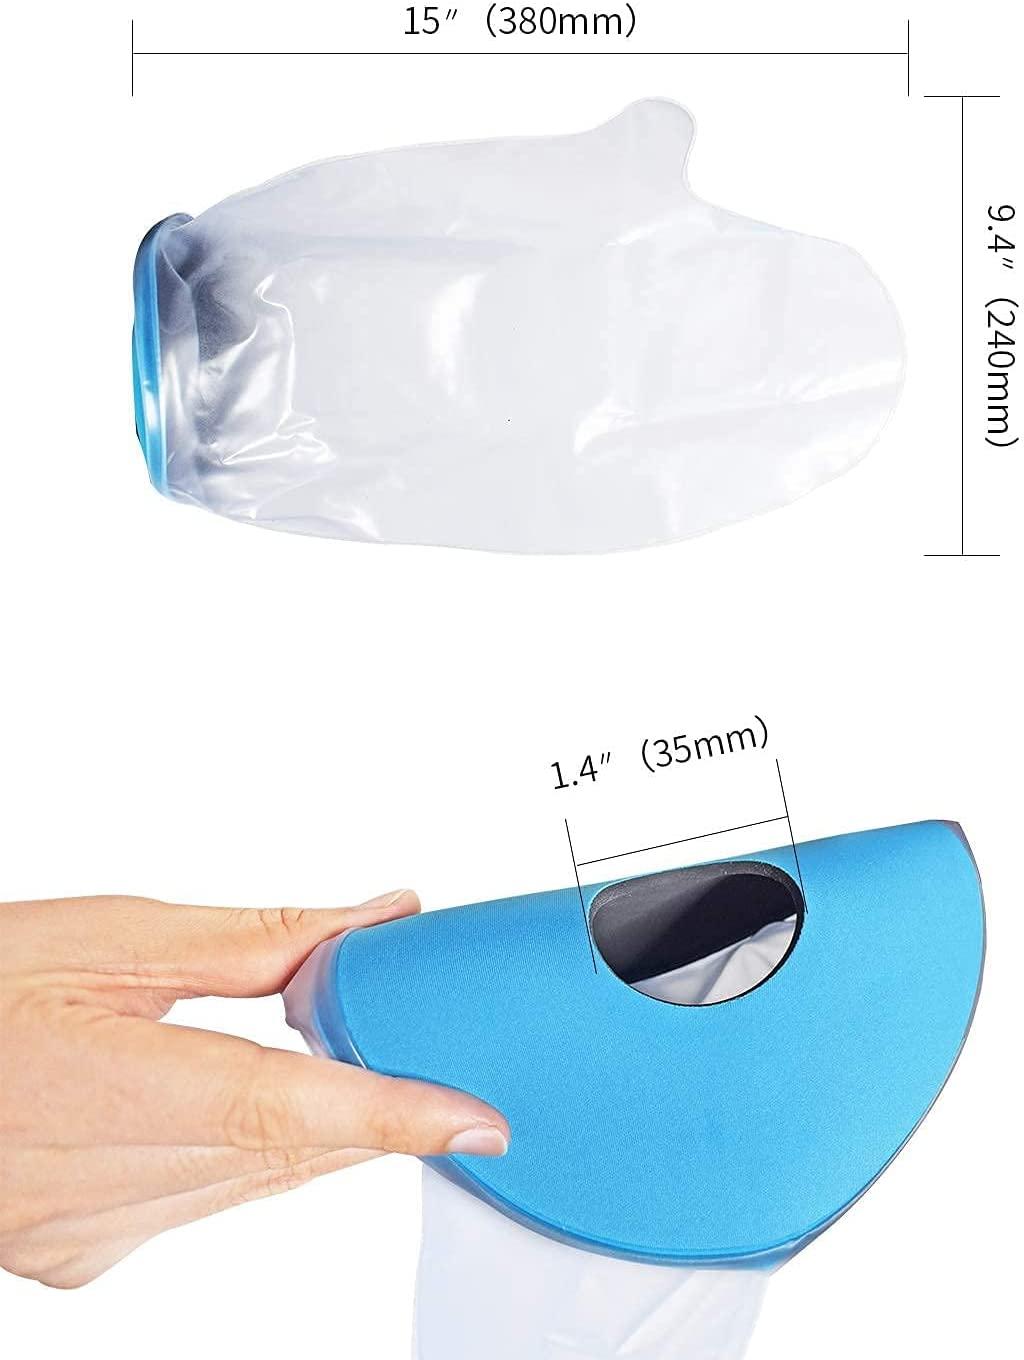 Weciygg Waterproof Hand Cast Cover for Shower-Reusable Adult Wrist